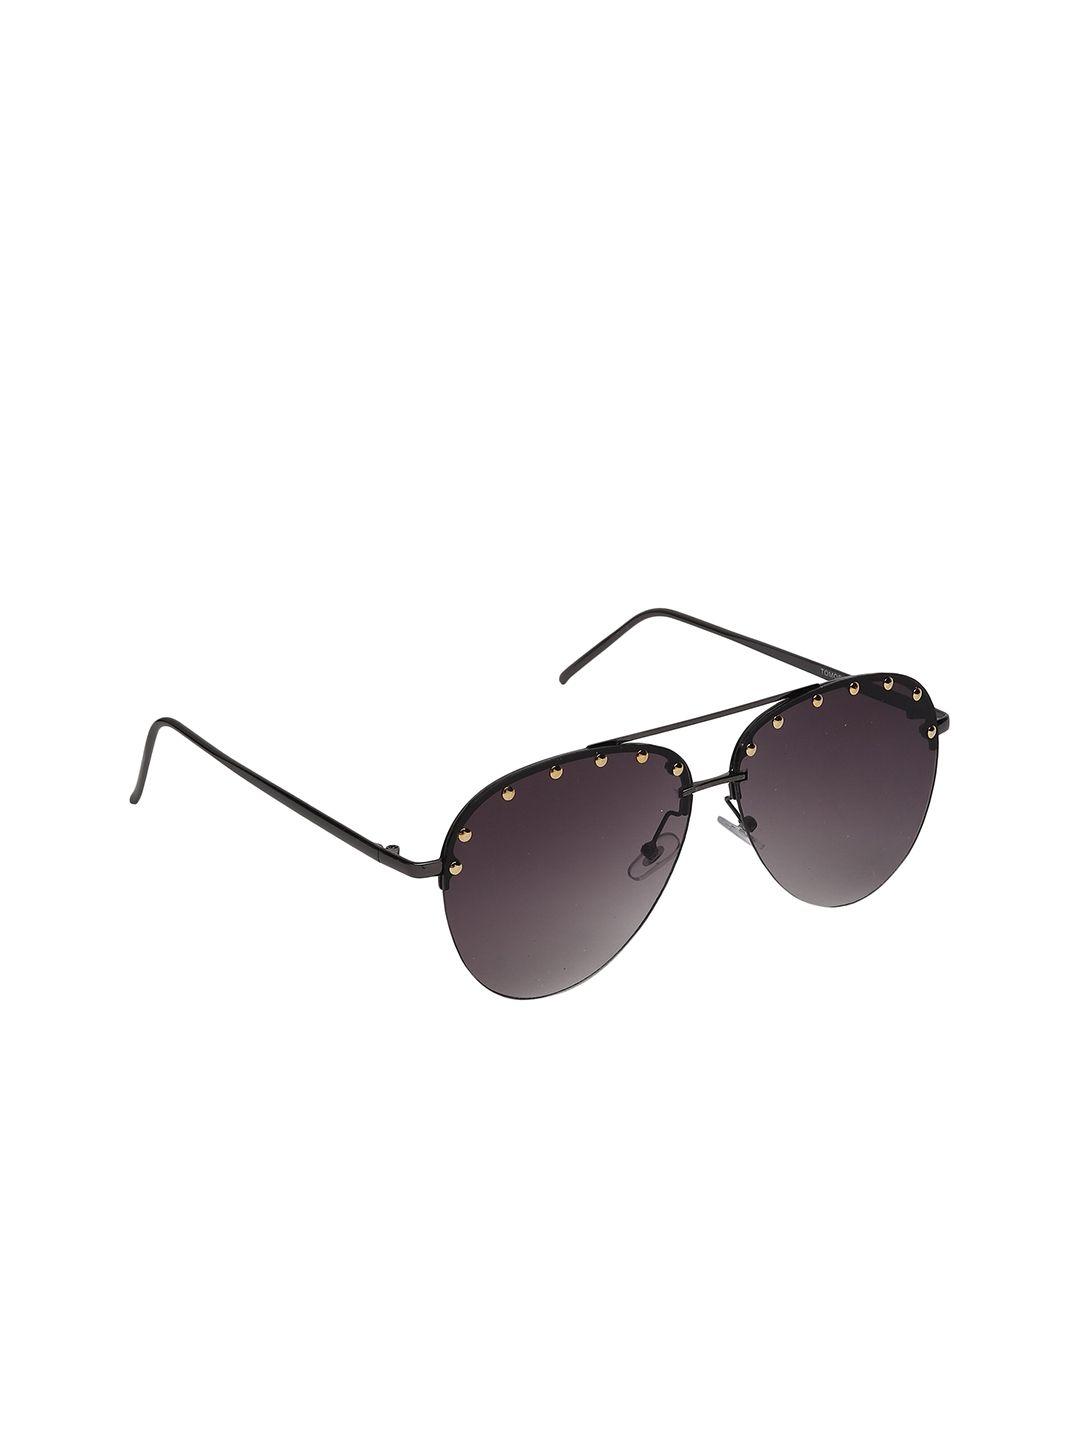 celebrity sunglasses unisex grey lens & black aviator sunglasses with uv protected lens